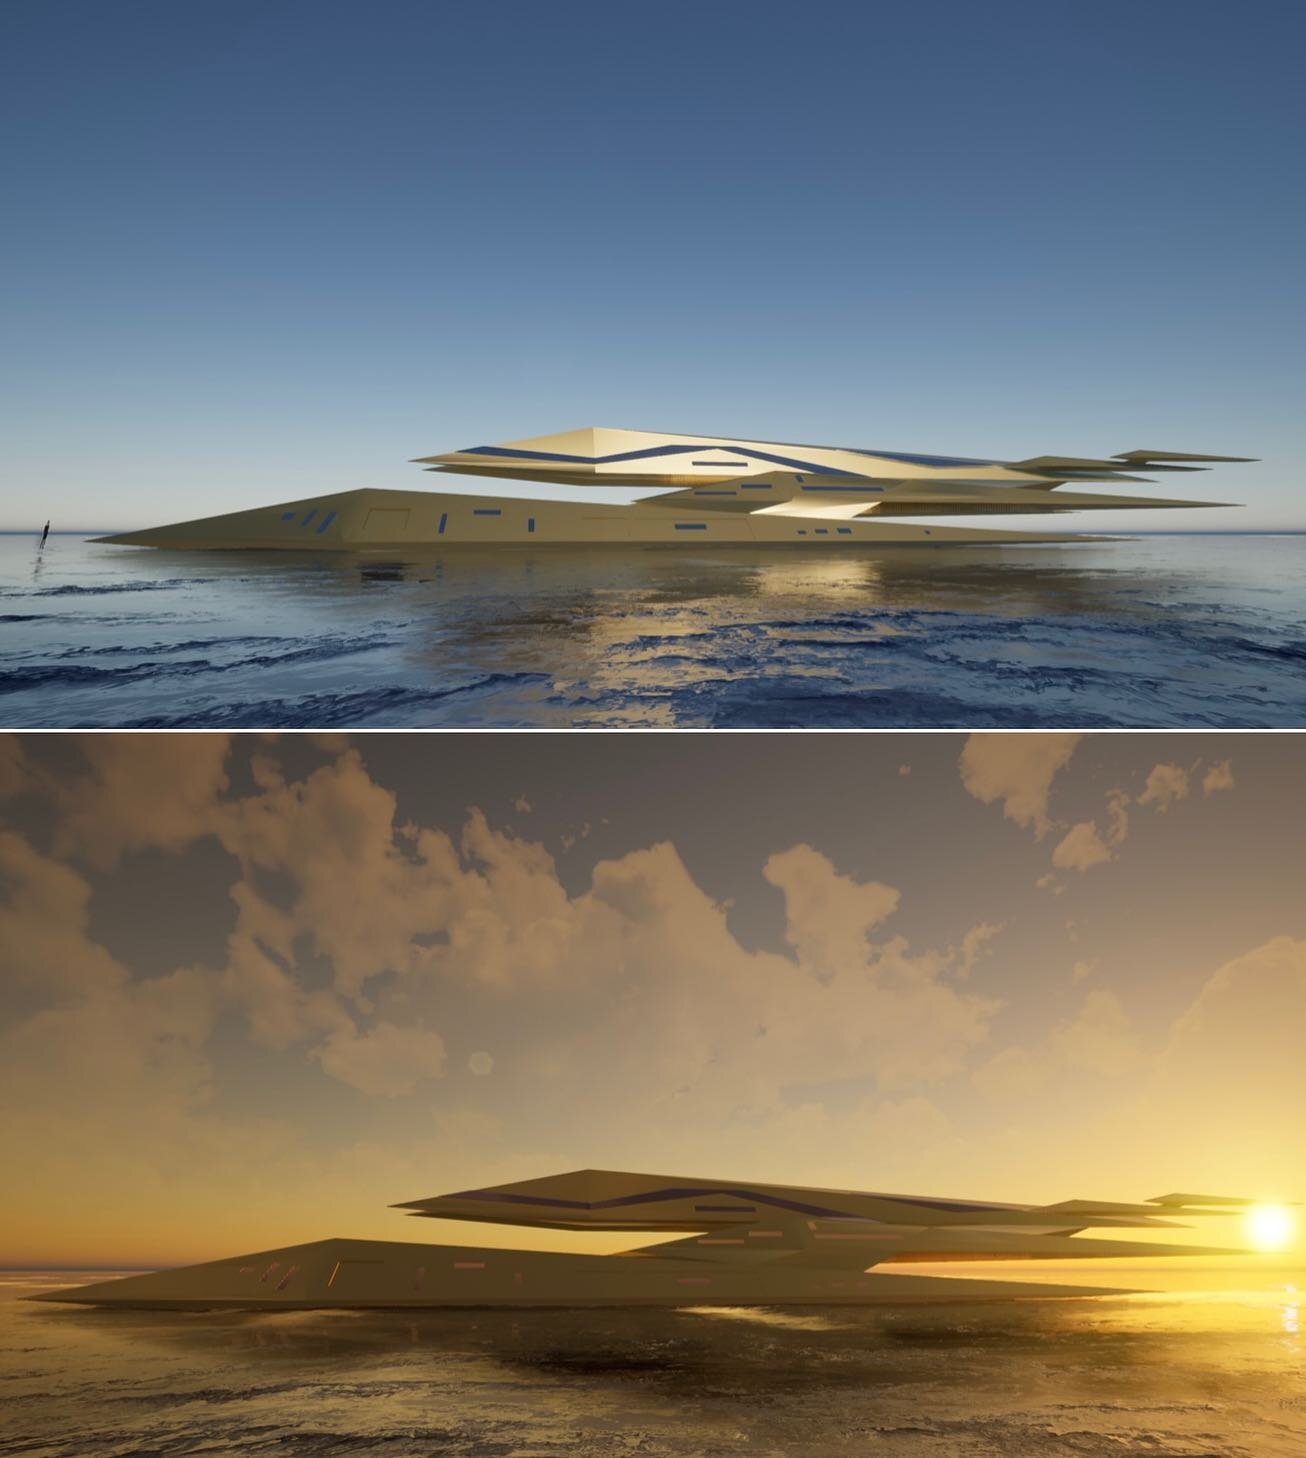 Yacht Greatnesses #yacht #superyacht #megayacht #boat #boatinternational #monacoyachtshow #design #concept #gold #future #yachting #architecture #monaco #conceptual #luxury